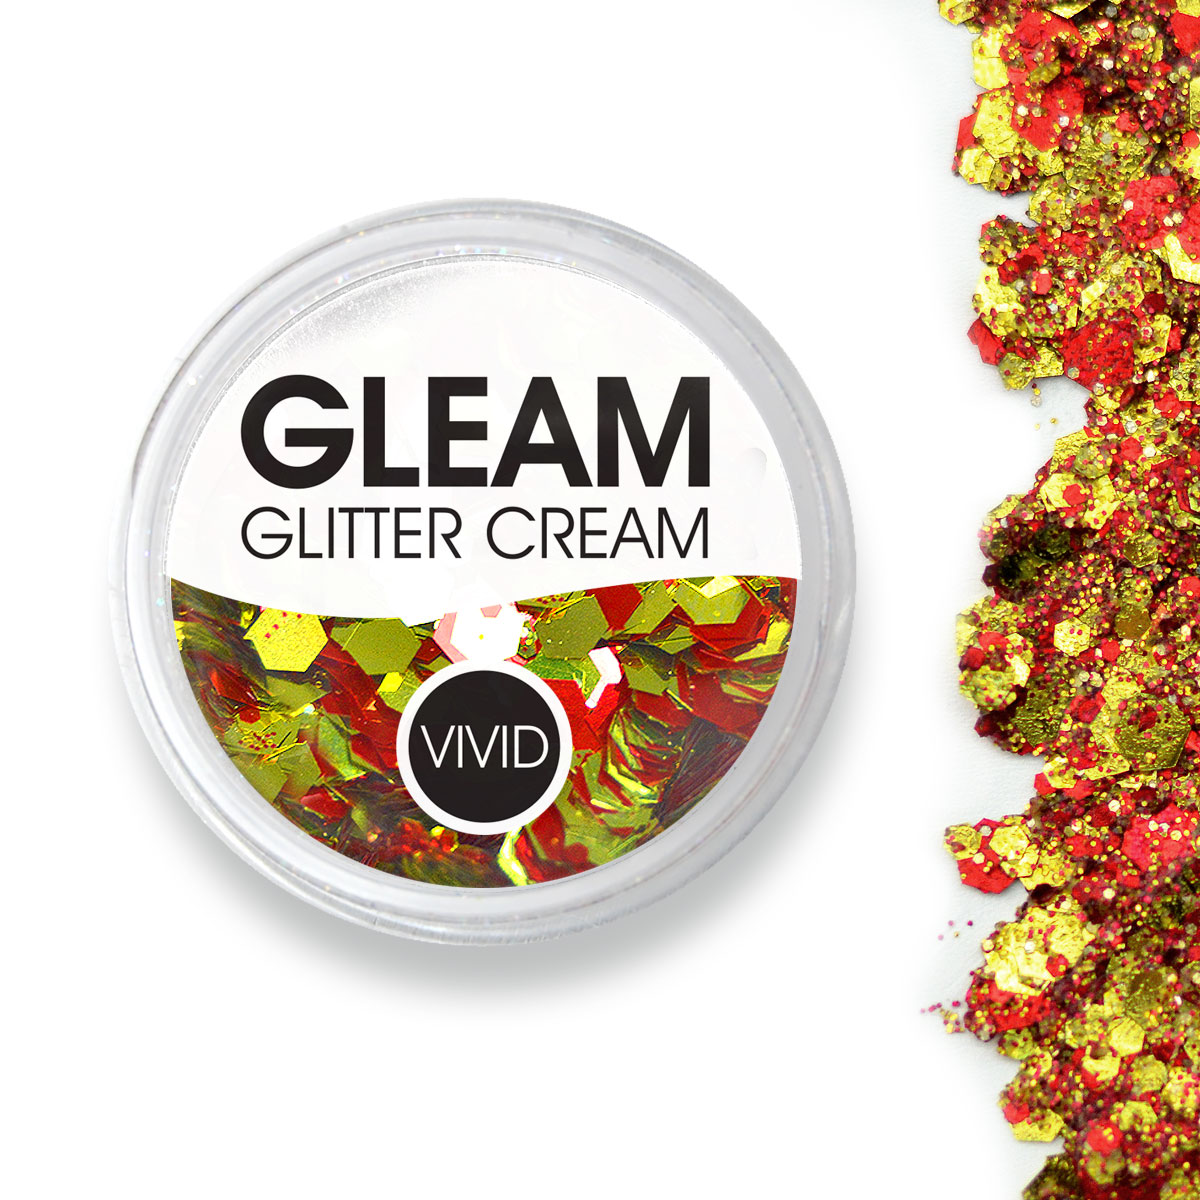 Victorious - Gleam "Gameday" Glitter Cream